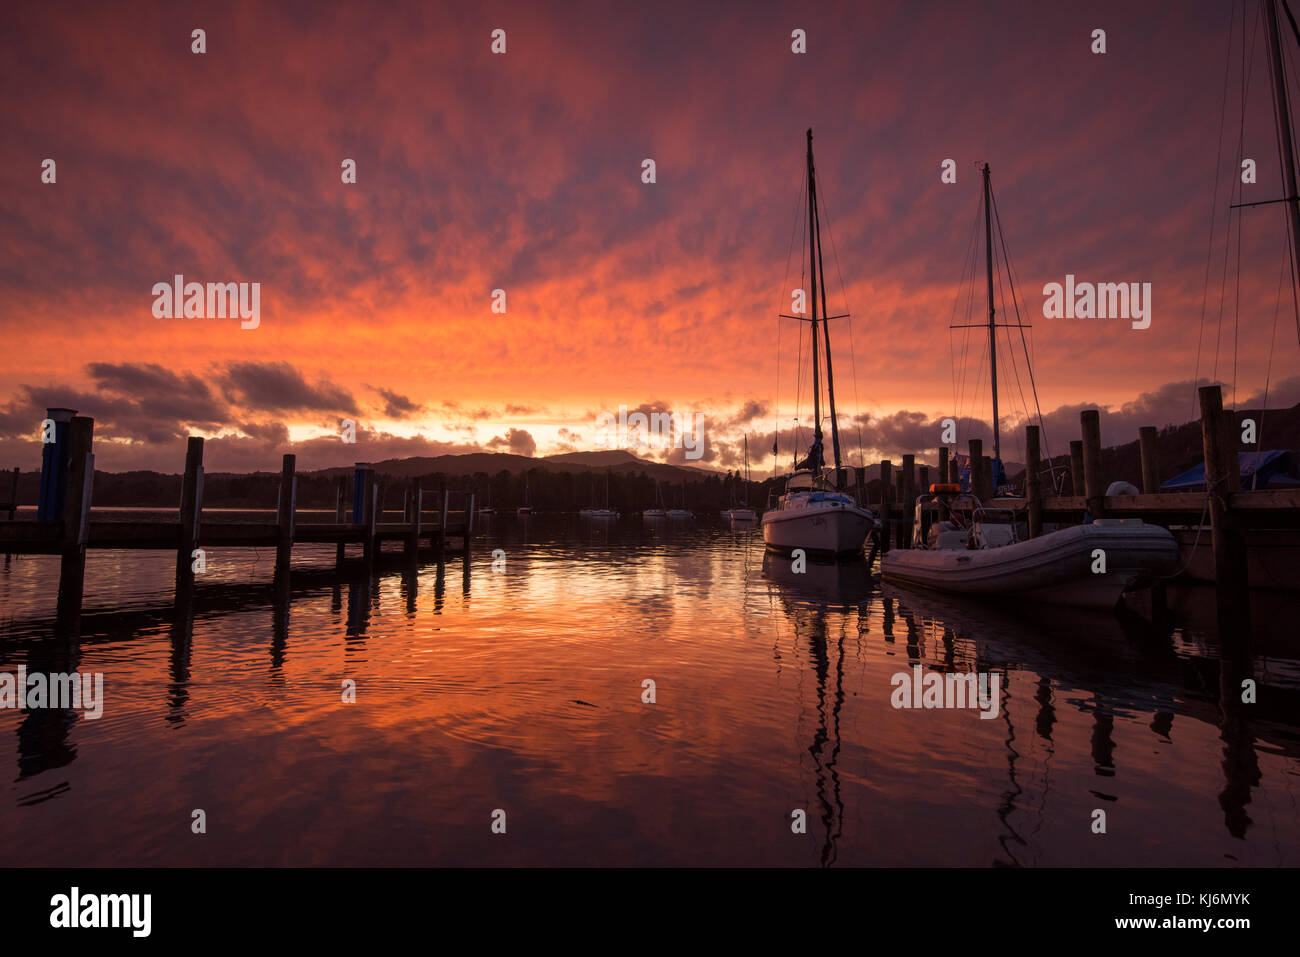 Sunset at Waterhead Pier on Lake Windermere near Ambleside, Cumbria Lake District England UK Stock Photo